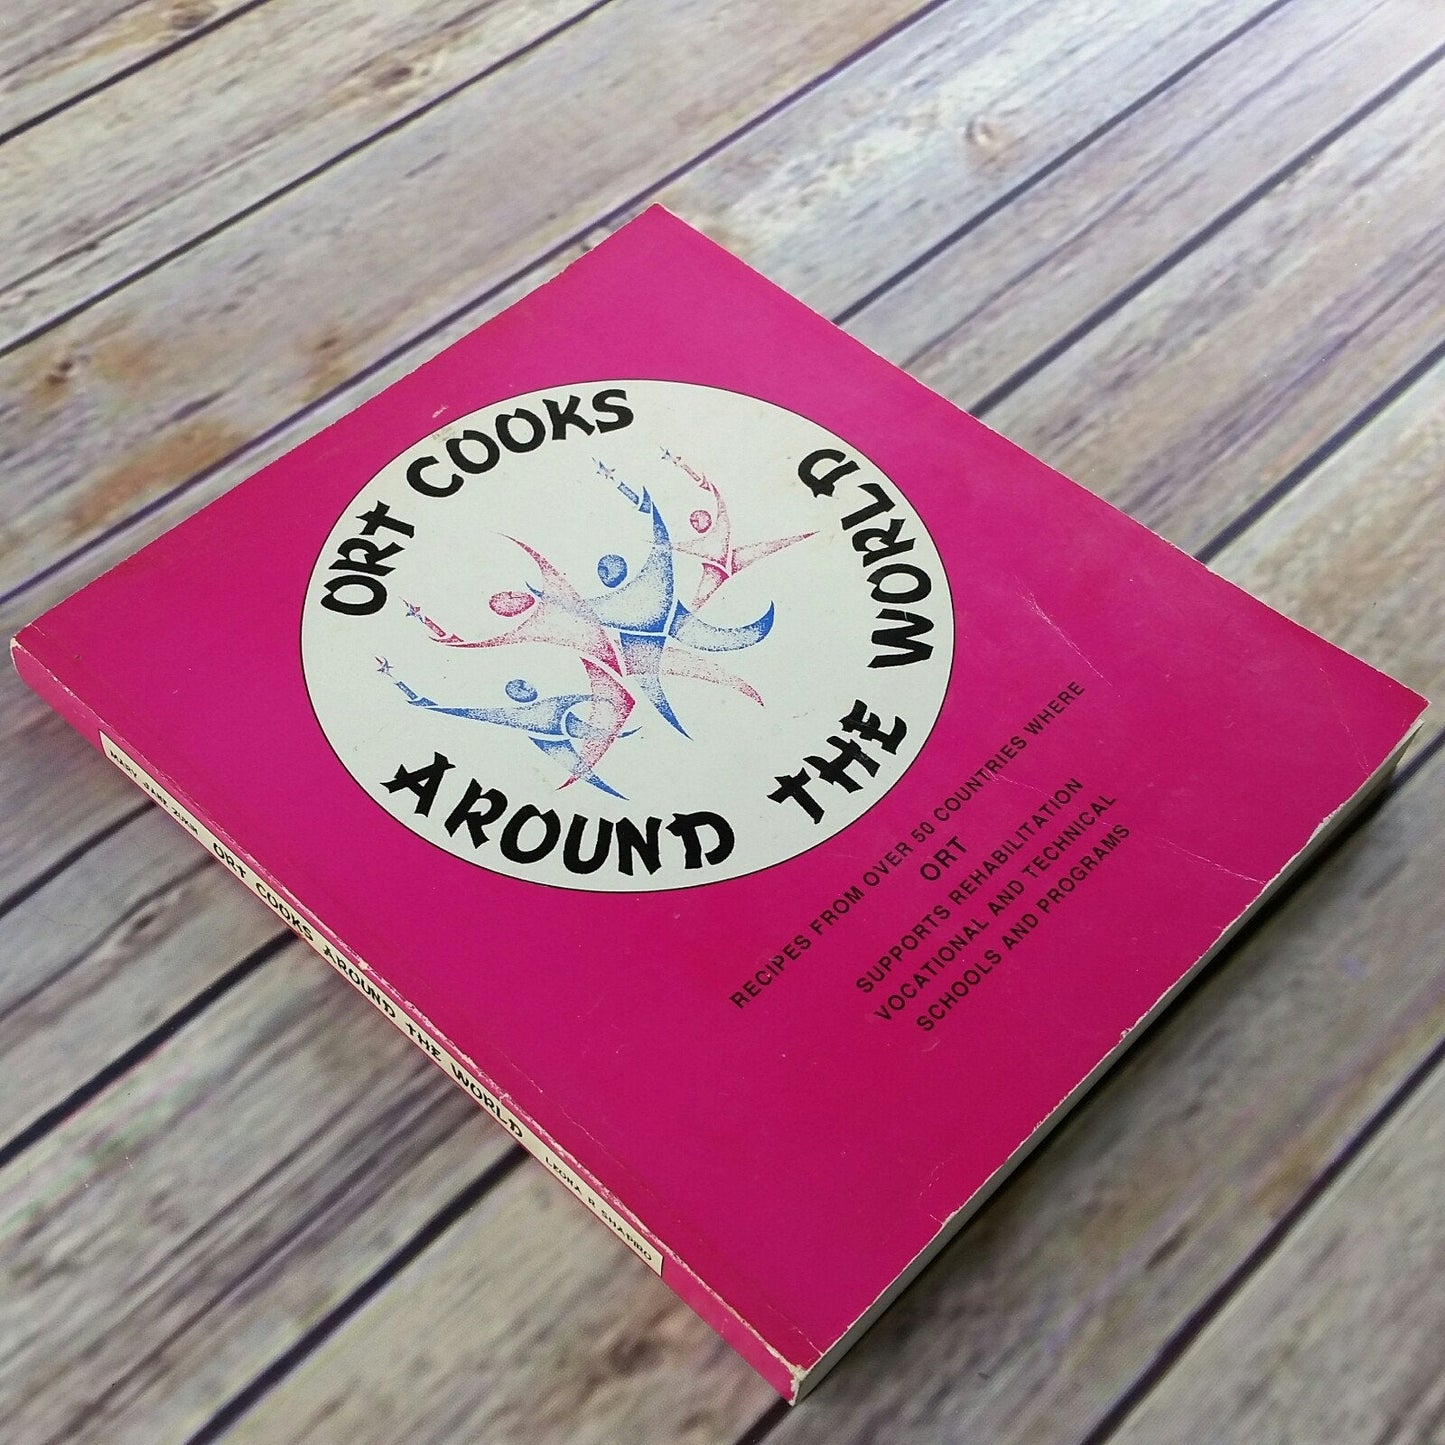 Vintage California Cookbook ORT Cooks Around the World Northern East Bay Organization For Rehabilitation through Training Women's American